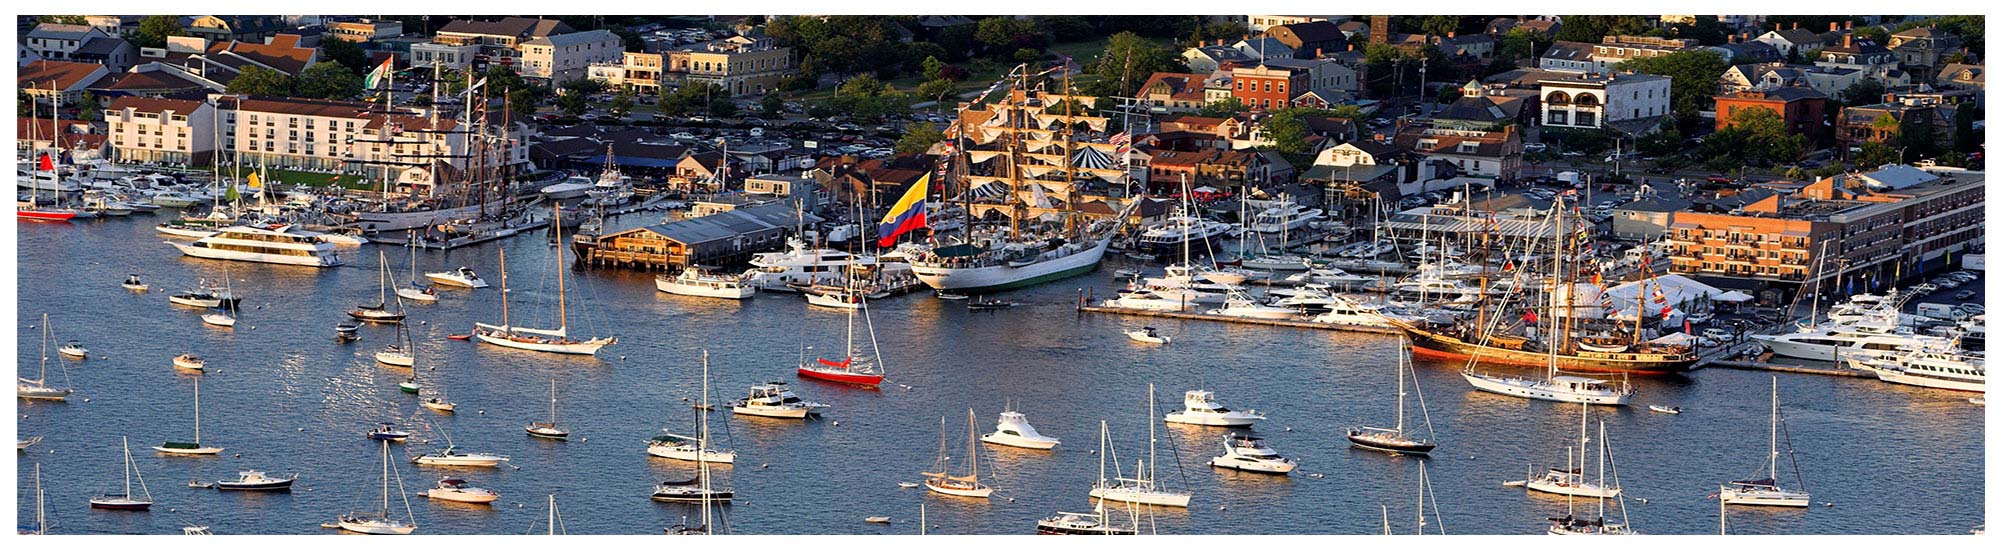 Sailboats and Yachts Fill the Harbor in Newport ri